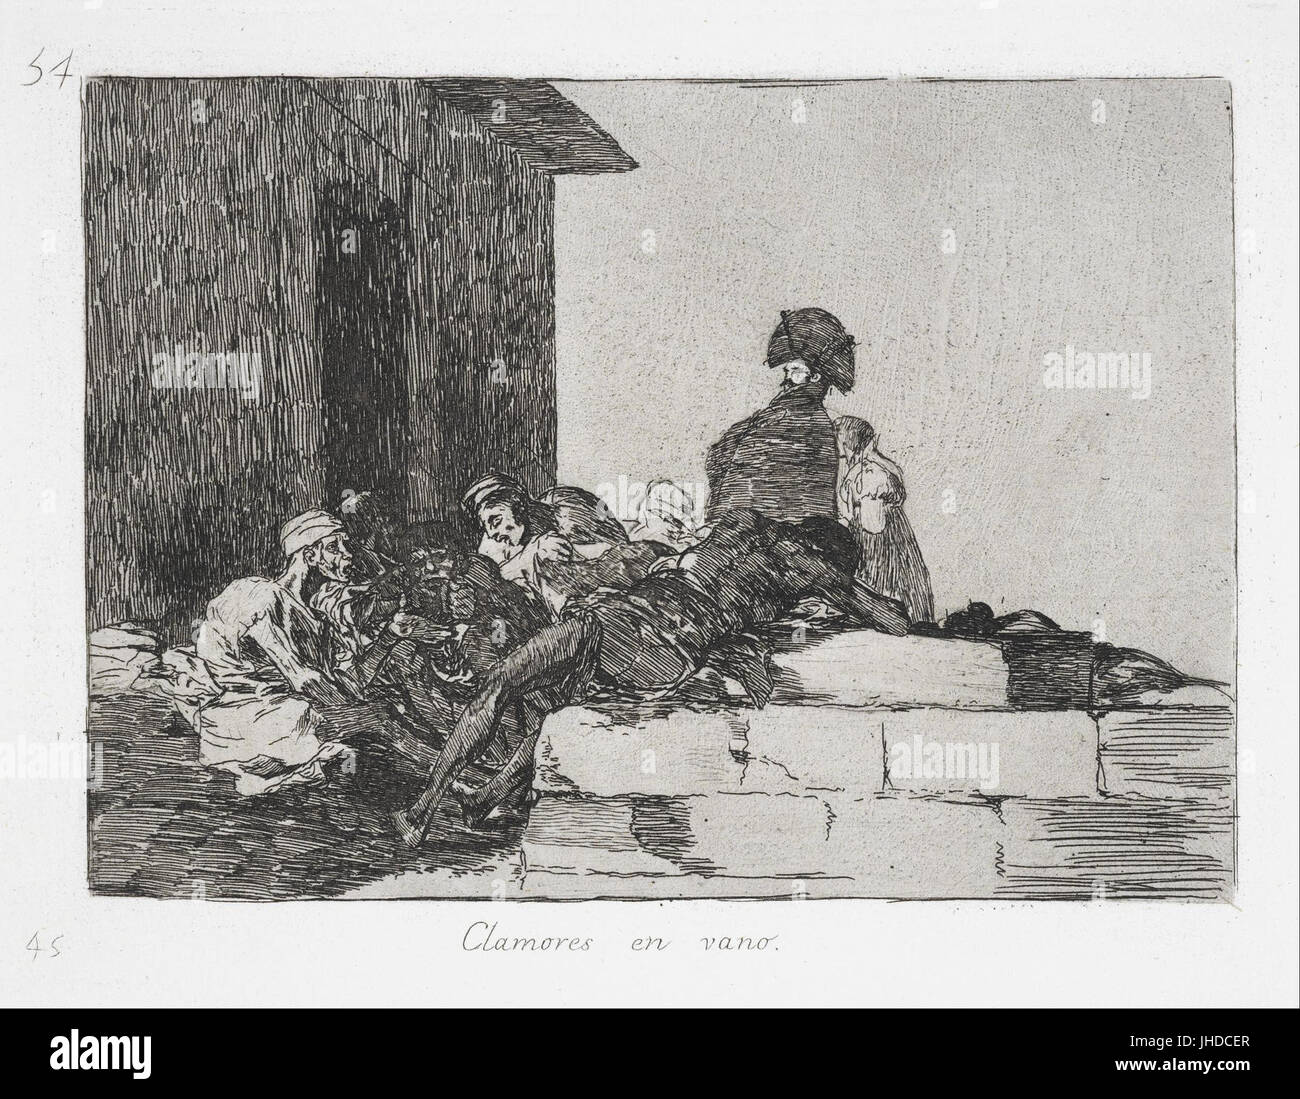 Francisco de Goya - Vain laments (Clamores en vano) from the series The Disasters of War (Los Desastres de la Guerra) - Stock Photo